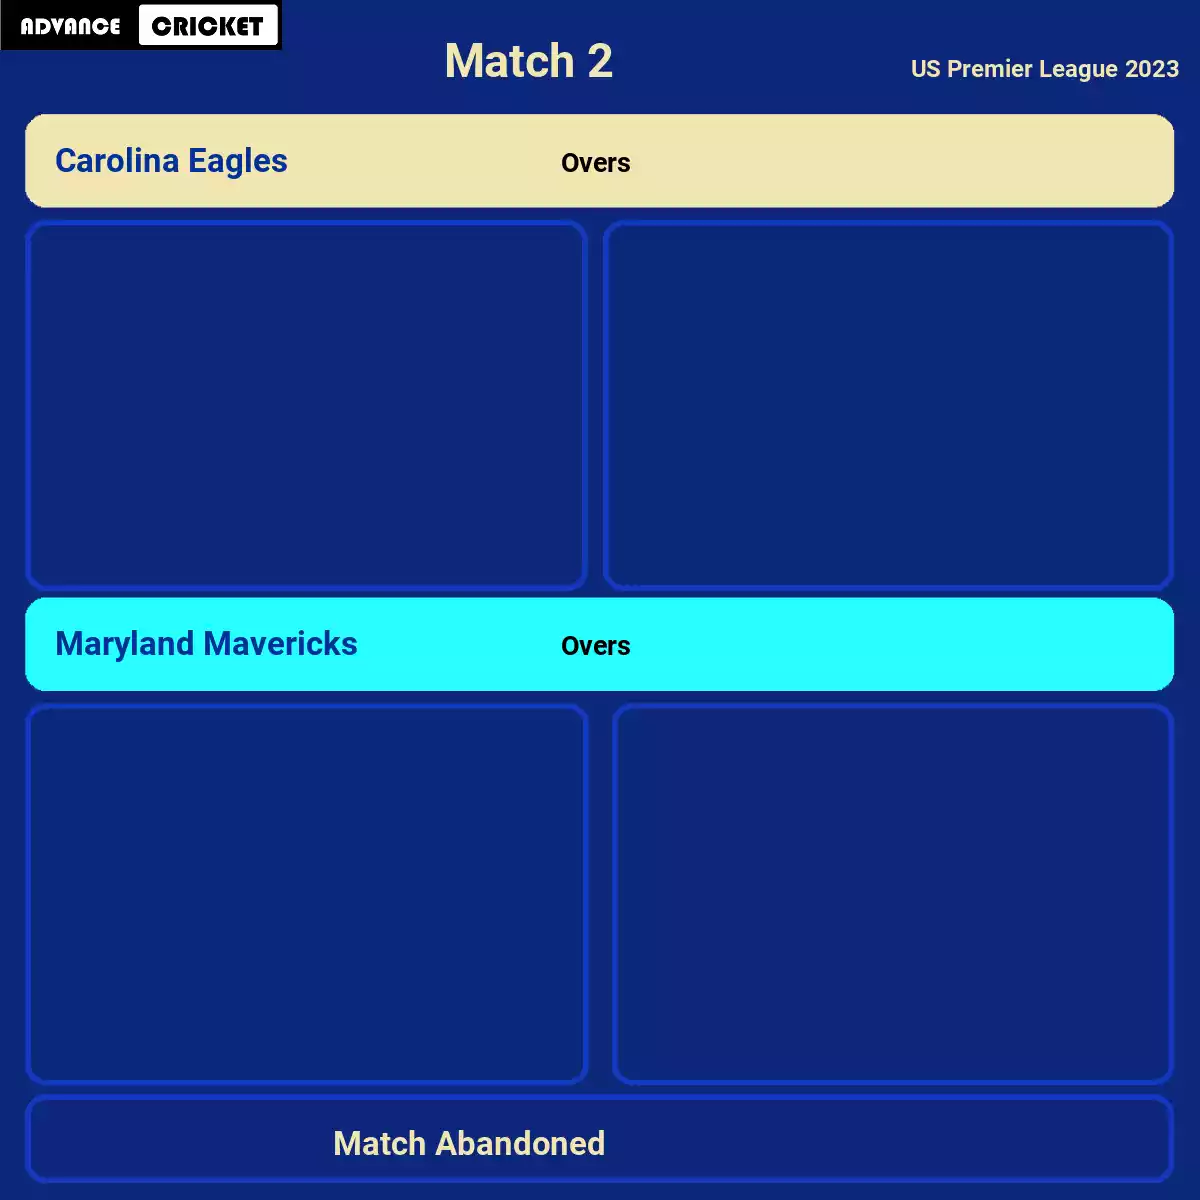 CAE vs MAV Match 2 US Premier League 2023